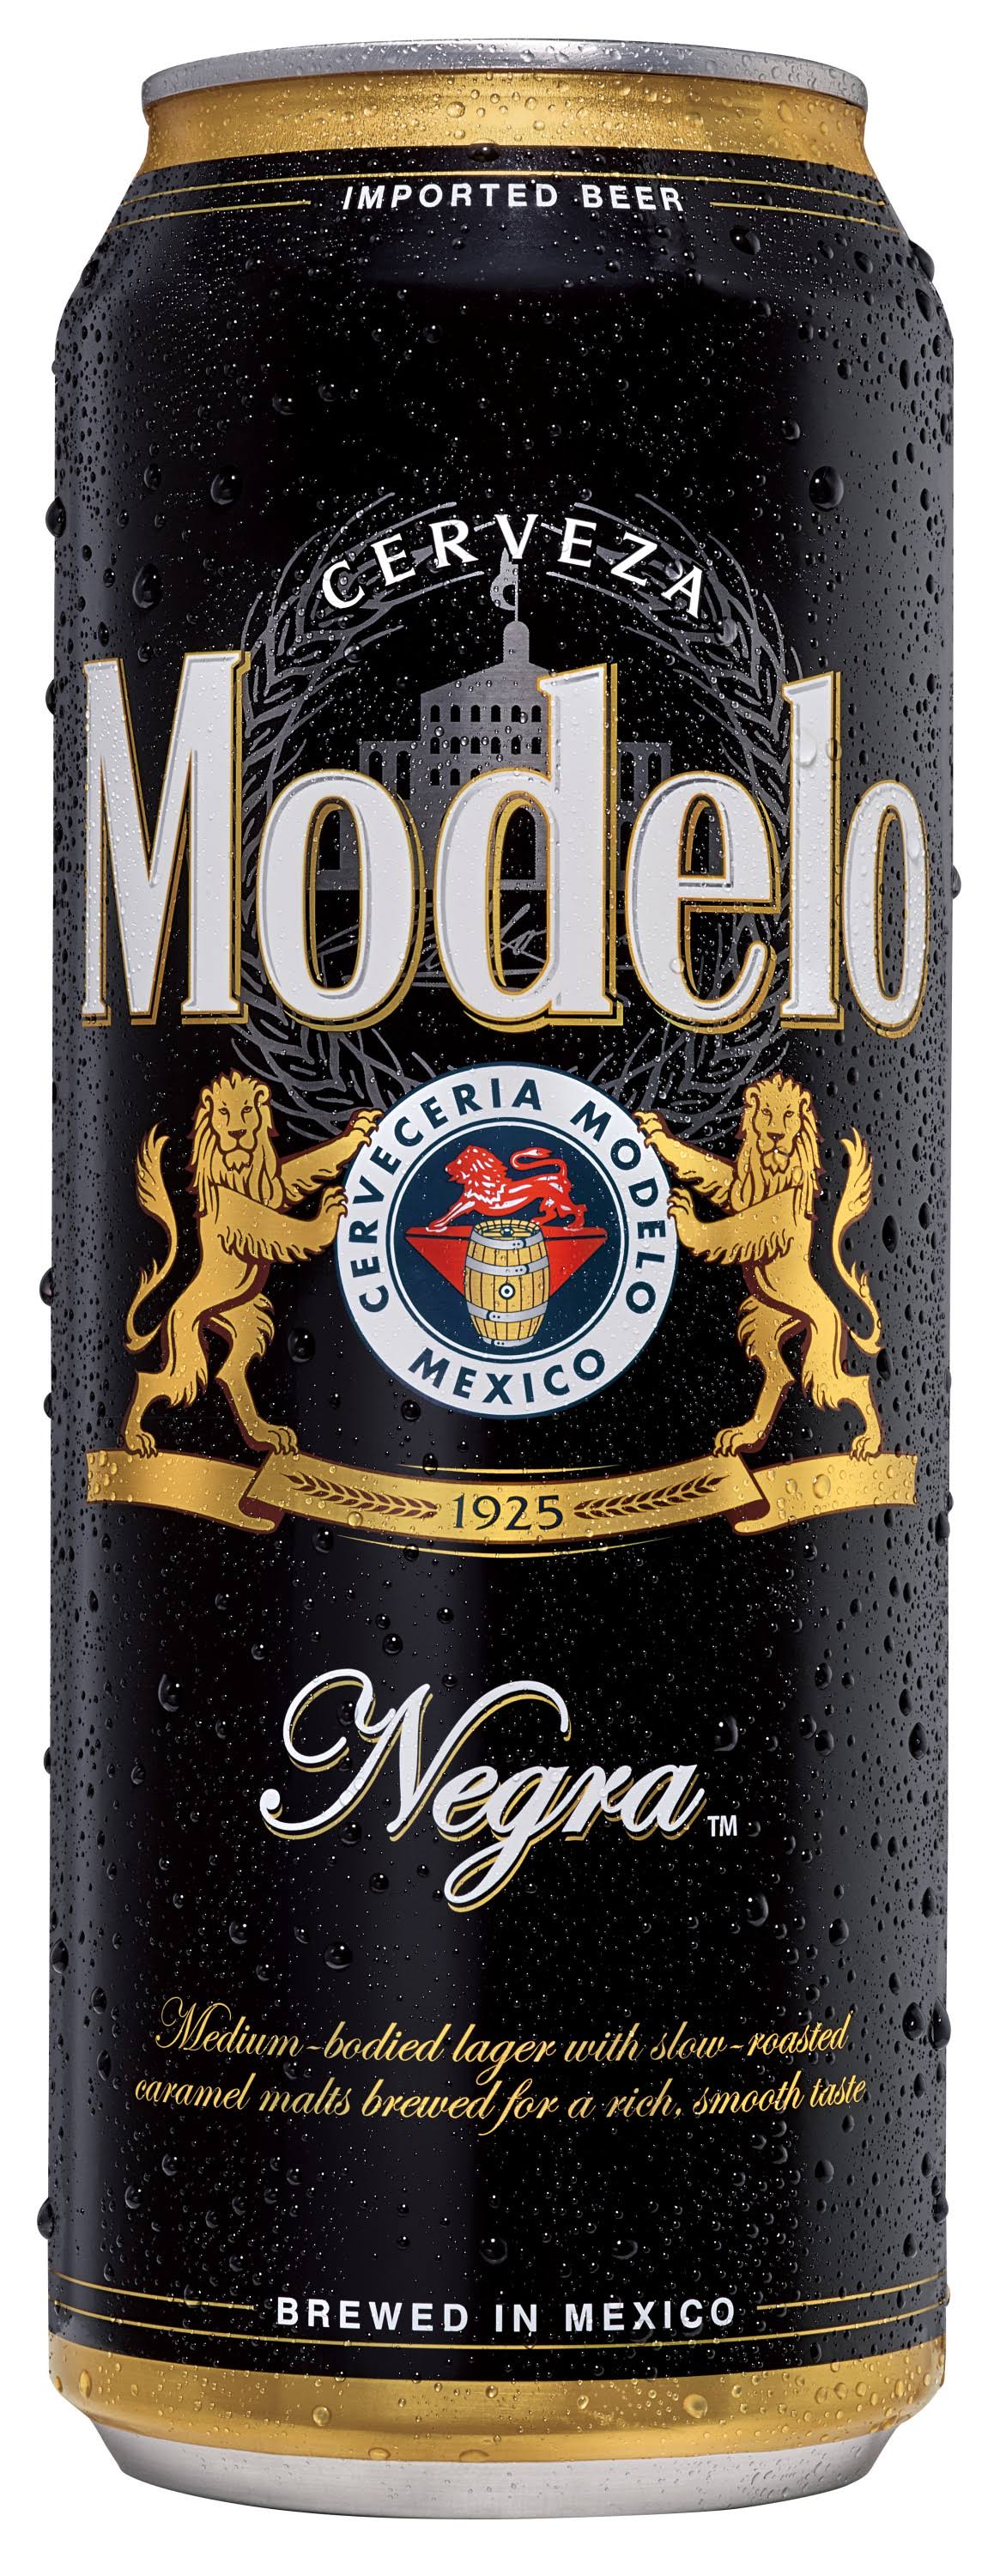 Modelo Negra Beer, Imported - 24 fl oz